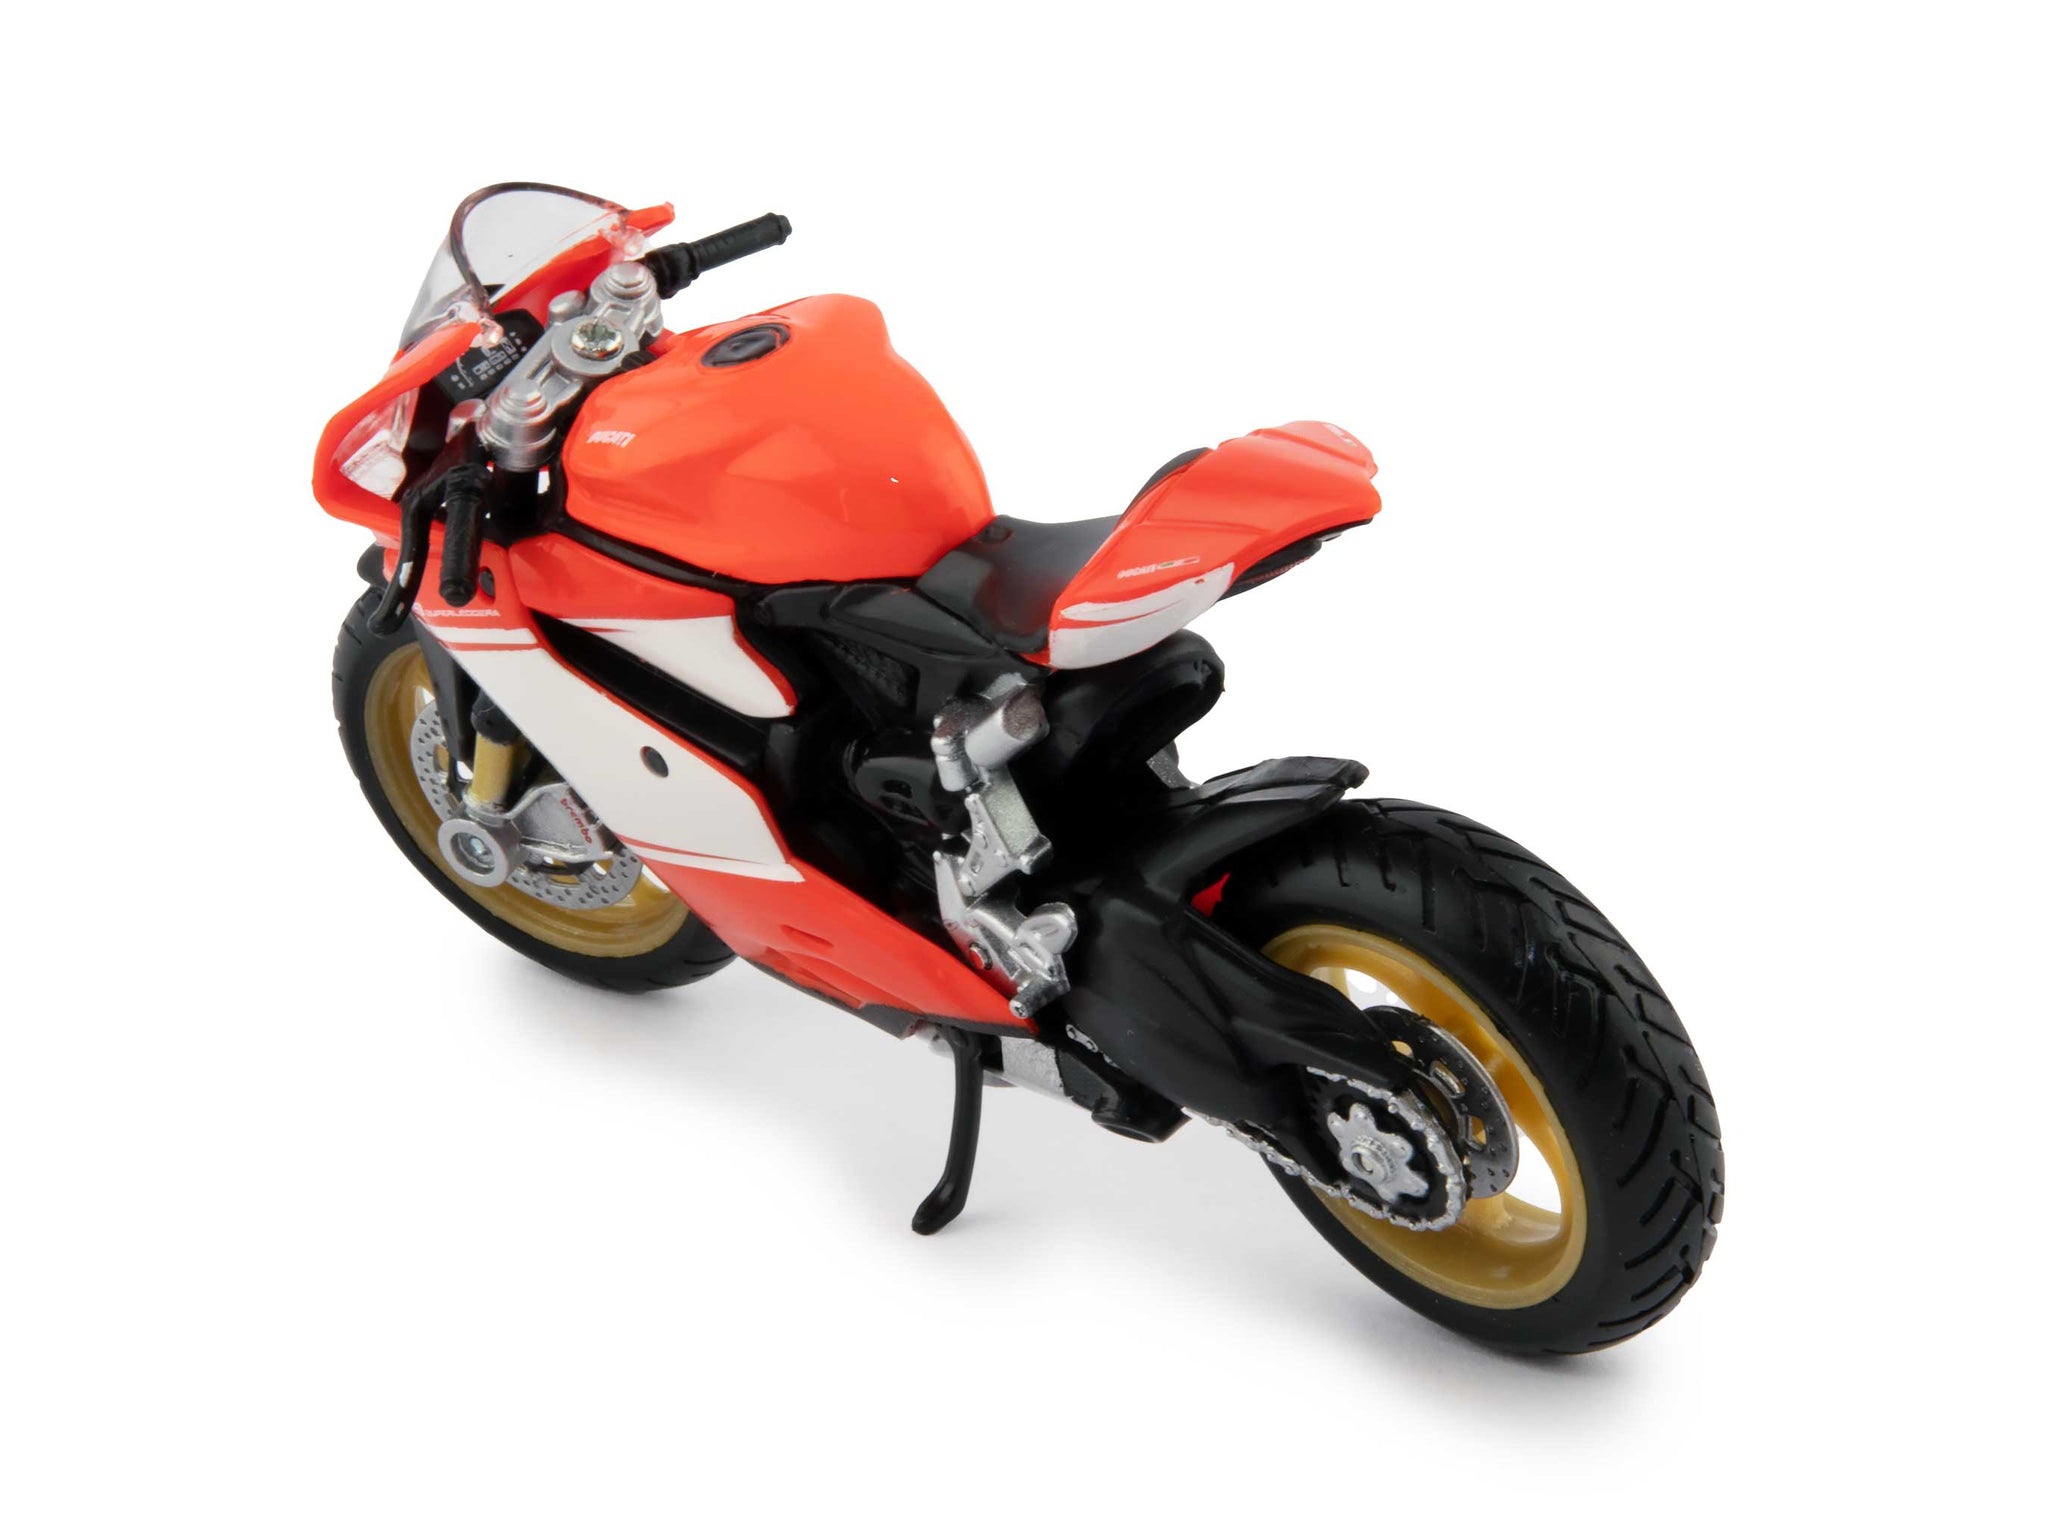 Maisto 1:18 Motorcycle Models Ducati Hypermotard Diecast Plastic